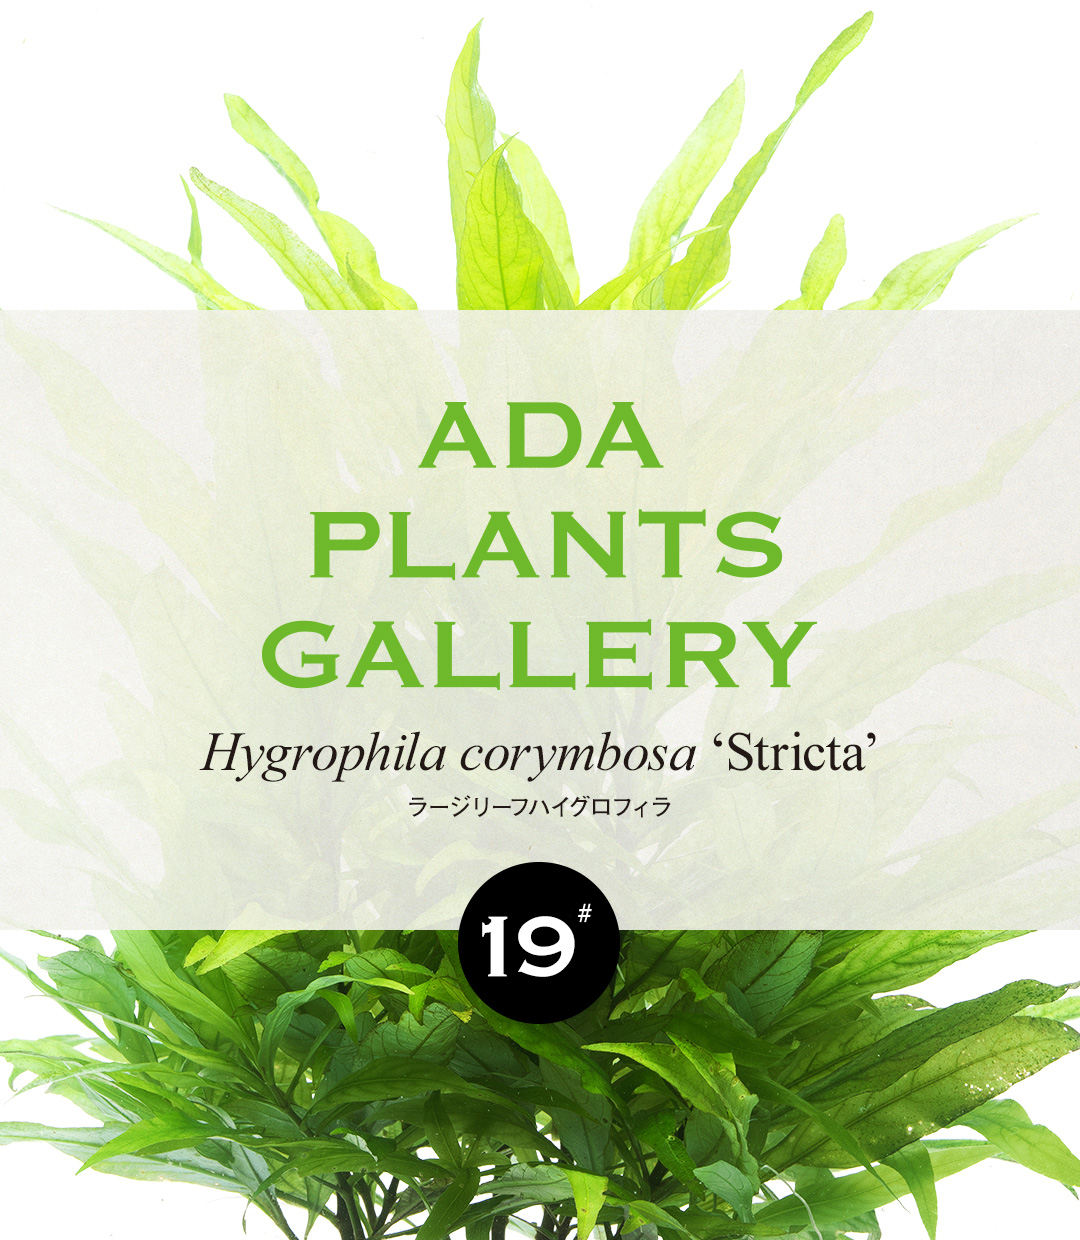 ADA PLANTS GALLERY #19「ラージリーフハイグロフィラ」